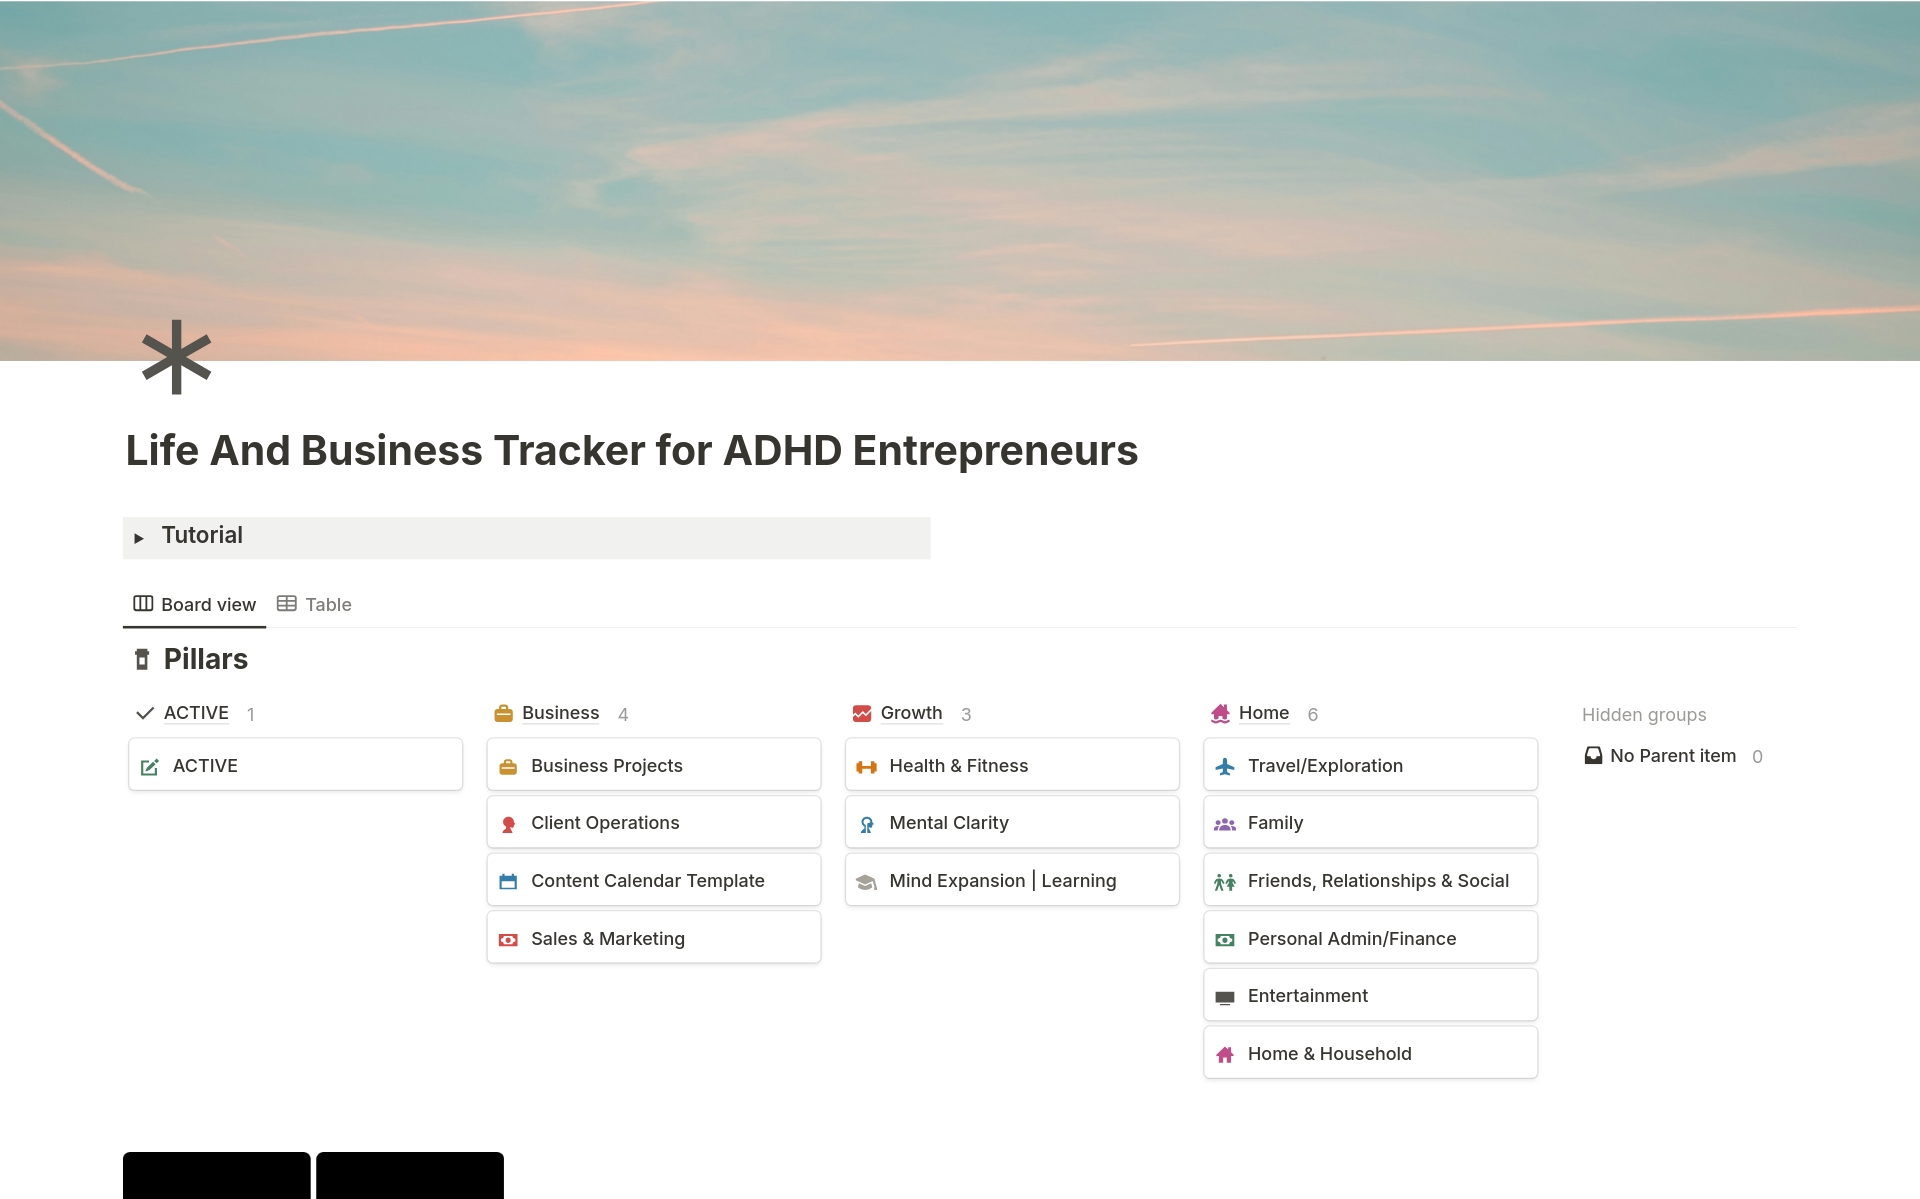 Vista previa de plantilla para Life & Business Tracker for ADHD Entrepreneurs